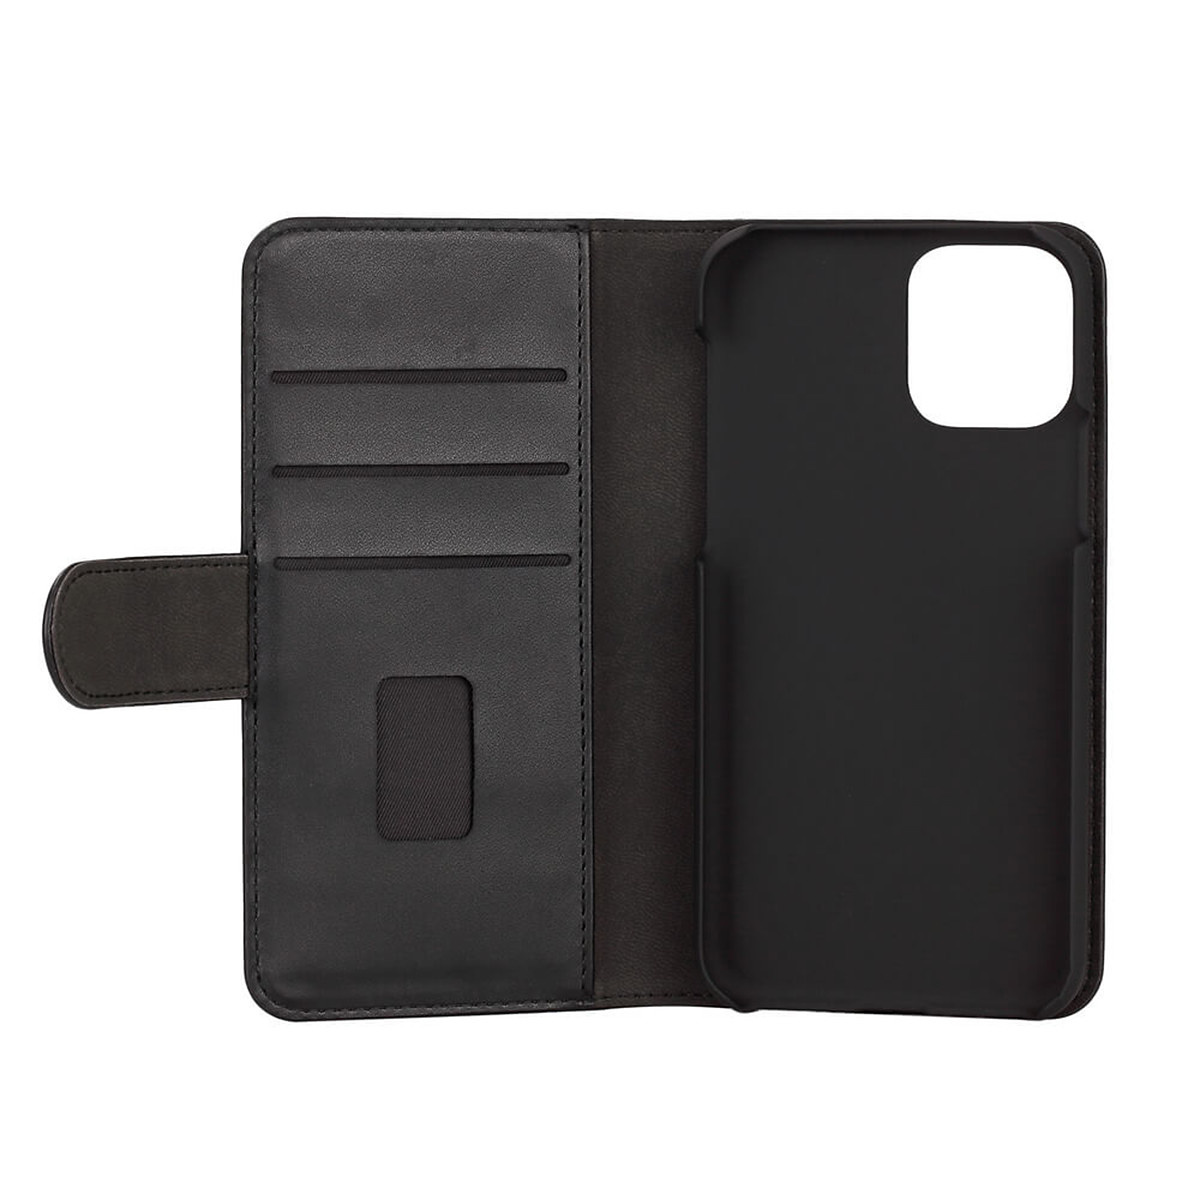 Gear plånboksväska, 2in1 magnetskal, iPhone 11 Pro, svart